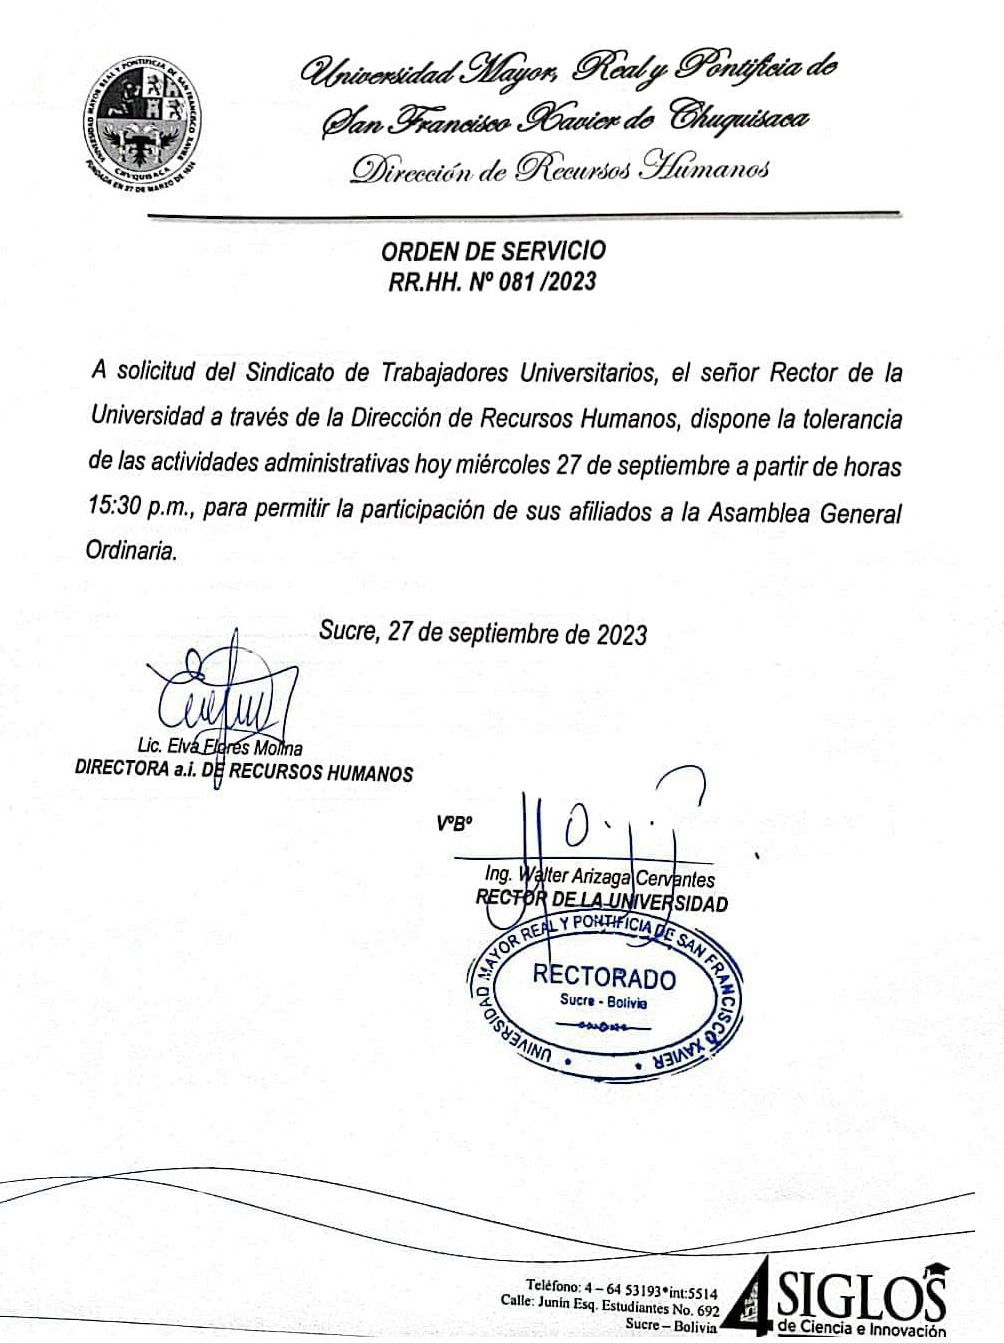 ORDEN DE SERVICIO RR.HH. Nº 081/2023, TOLERANCIA ACTIVIDADES ADMINISTRATIVAS.